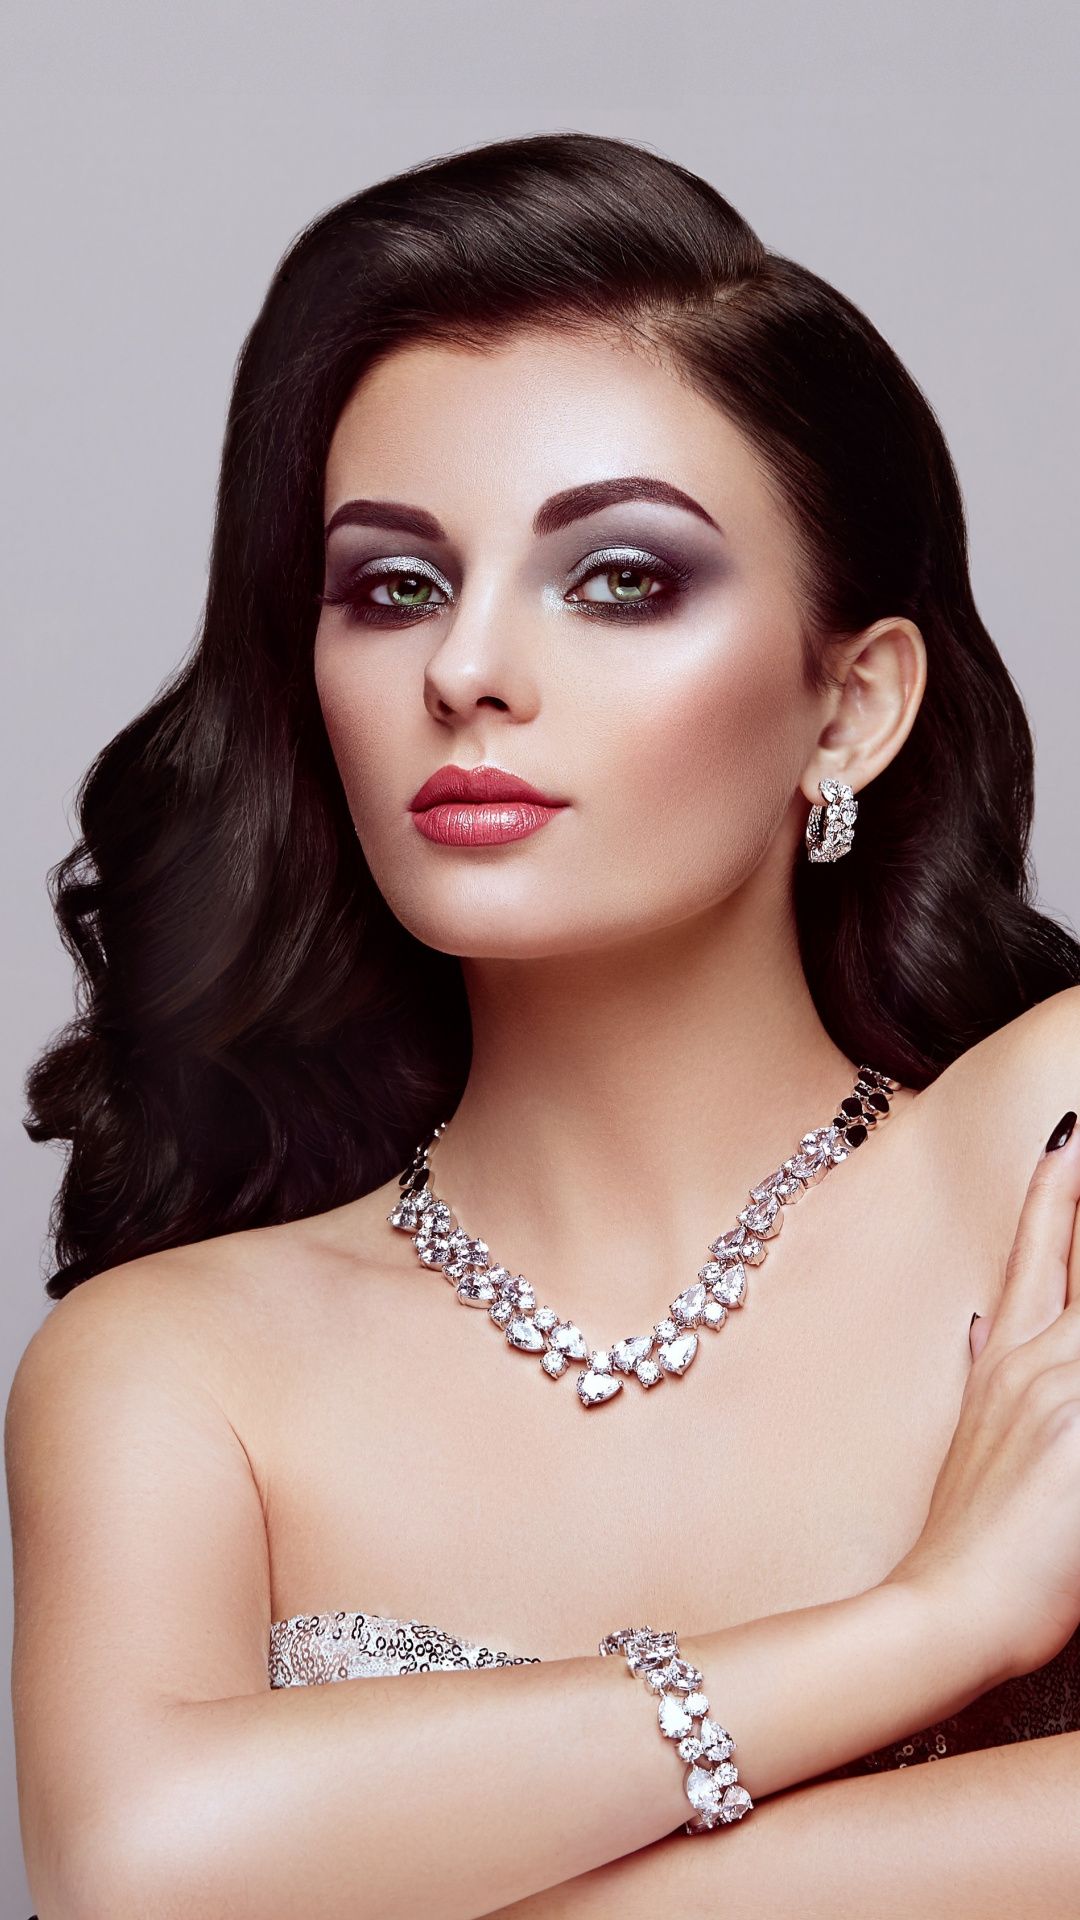 Model, makeup, wearing jewellery, beautiful, 1080x1920 wallpaper